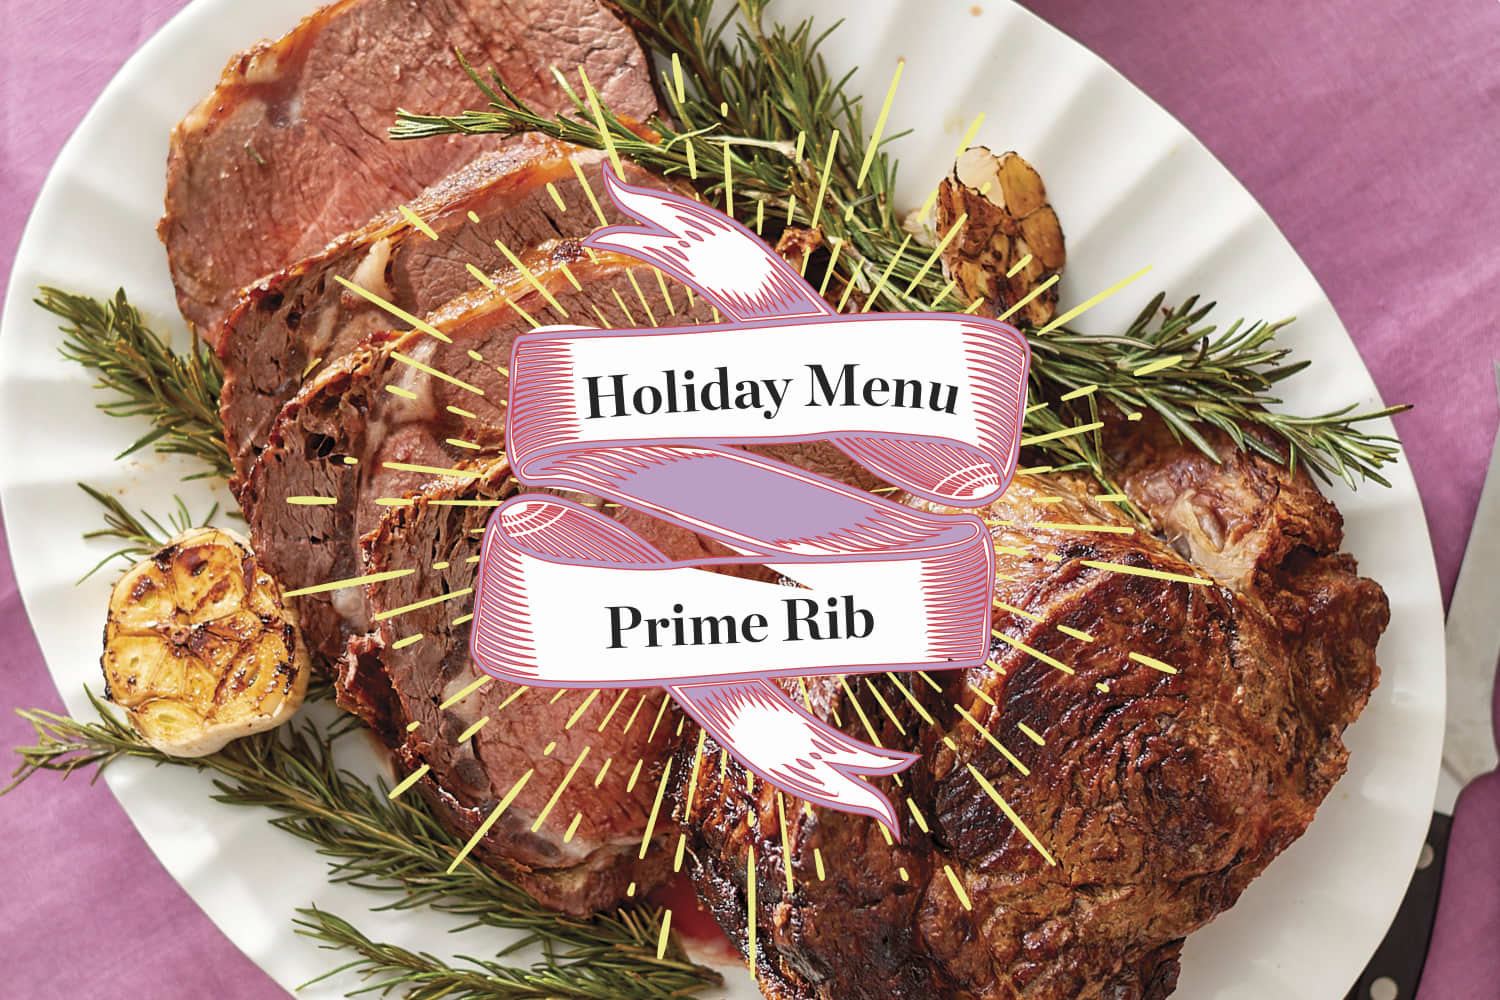 Prime Rib Christmas Menu
 A Menu for a Prime Rib Holiday Dinner